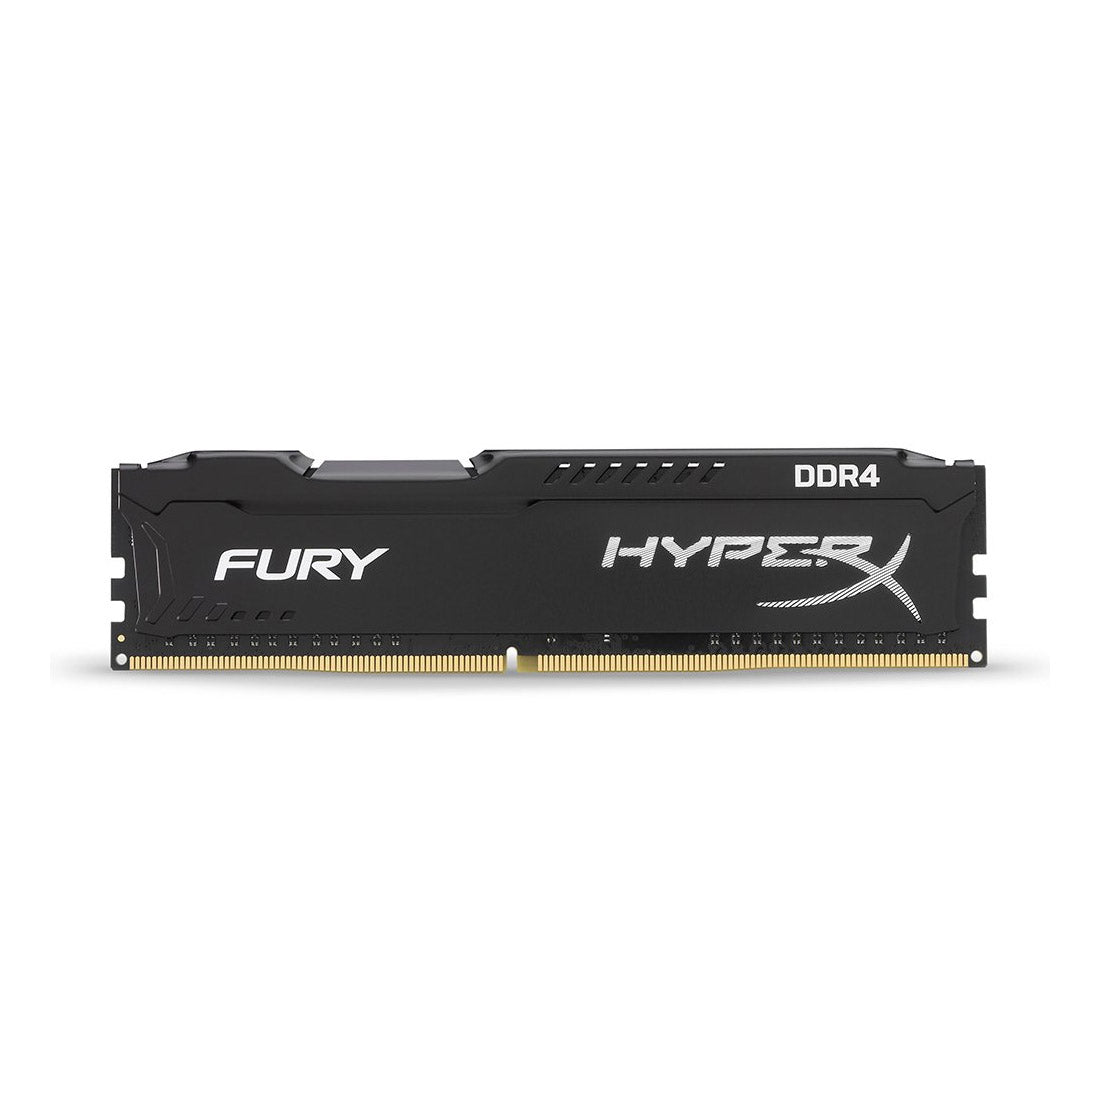 [RePacked] HyperX Fury RAM 2400MHz DDR4 UDIMM 288 Pin Desktop Memory